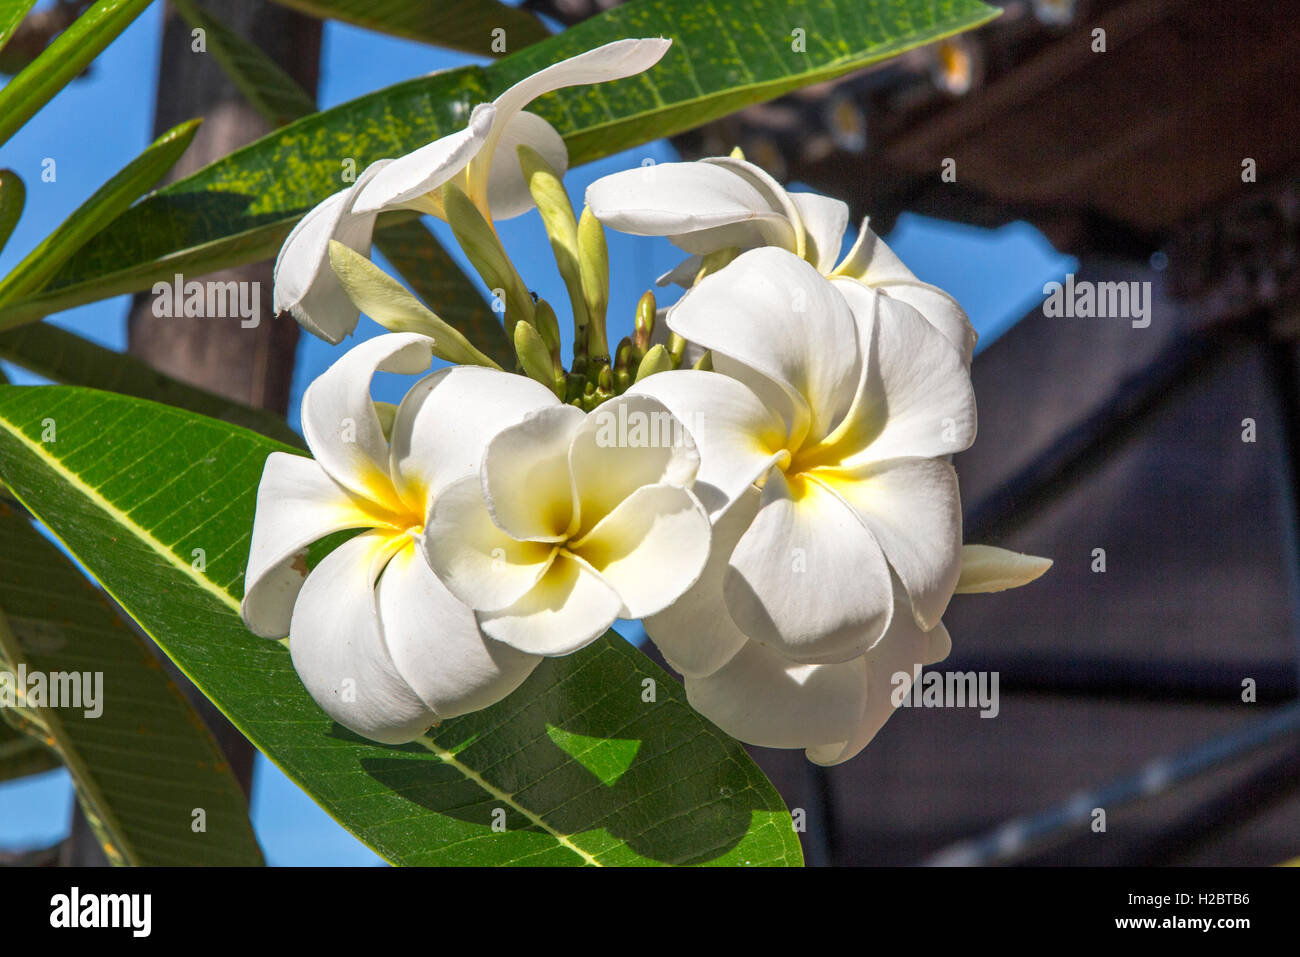 Indonesia, Bali, Susut, fragrant white frangipani, plumeria, flowers Stock Photo